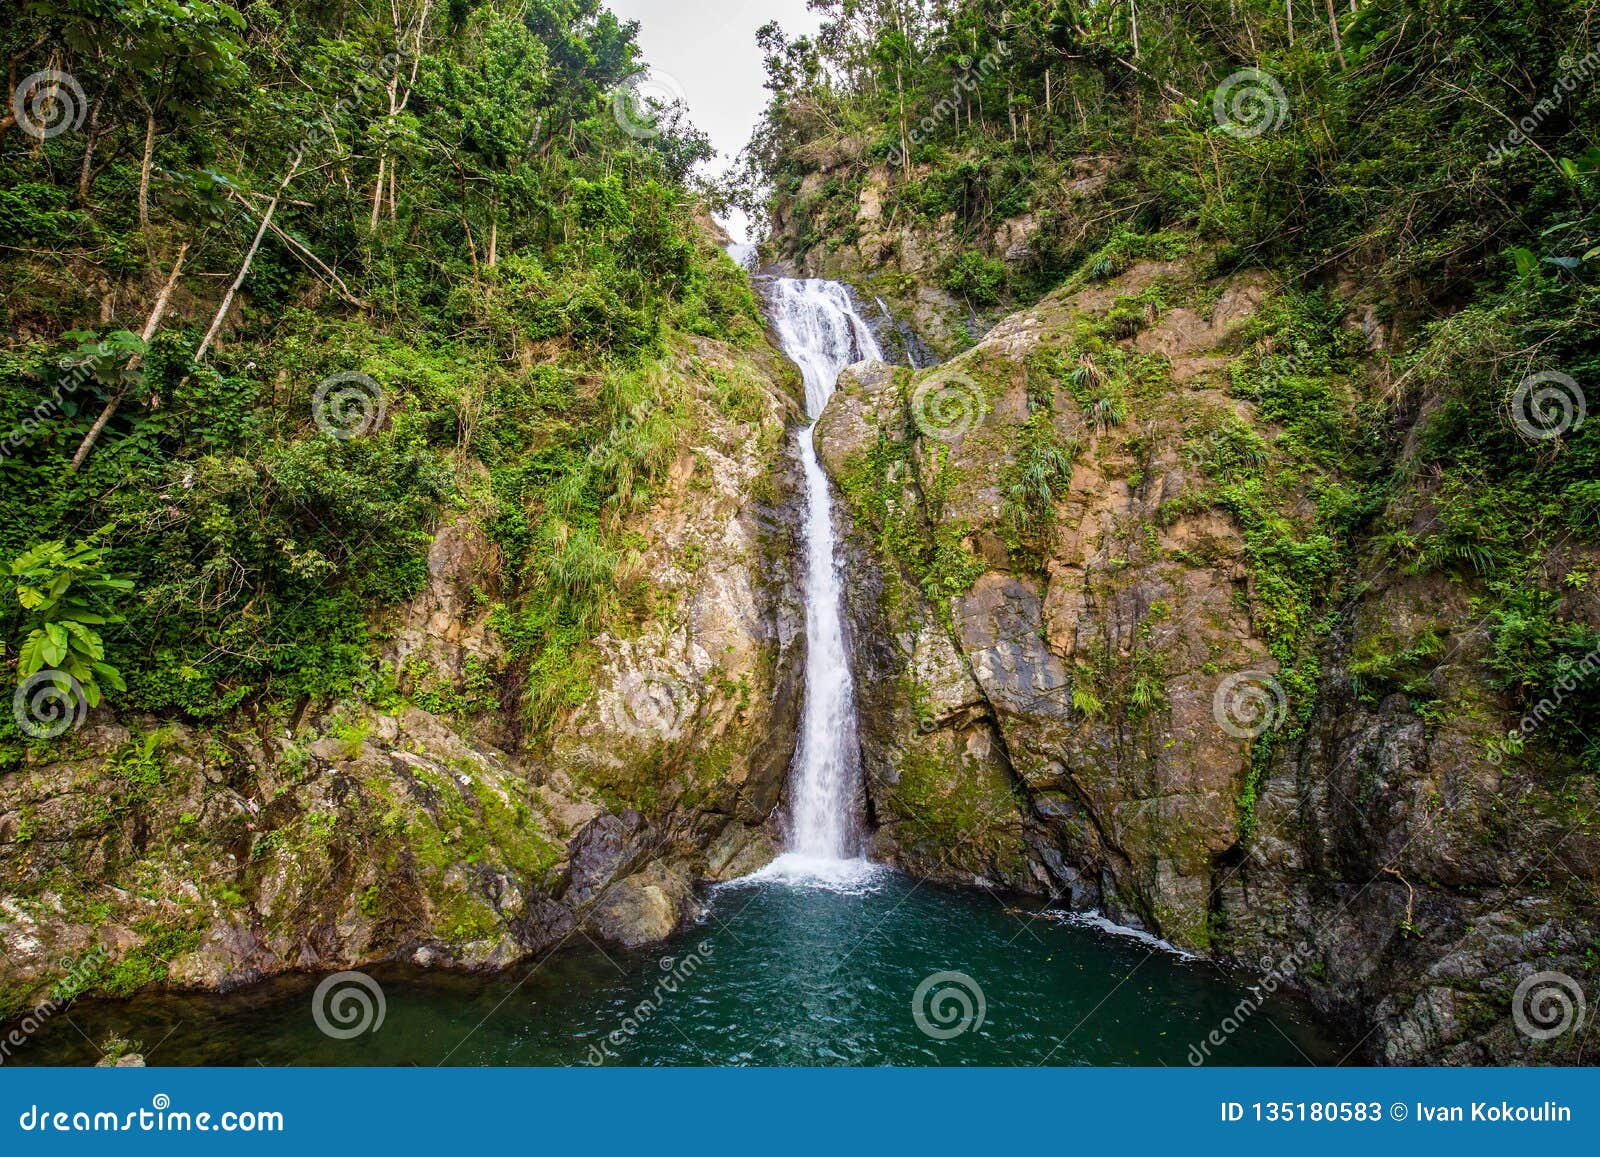 chorro de dona juana waterfall in puerto rico